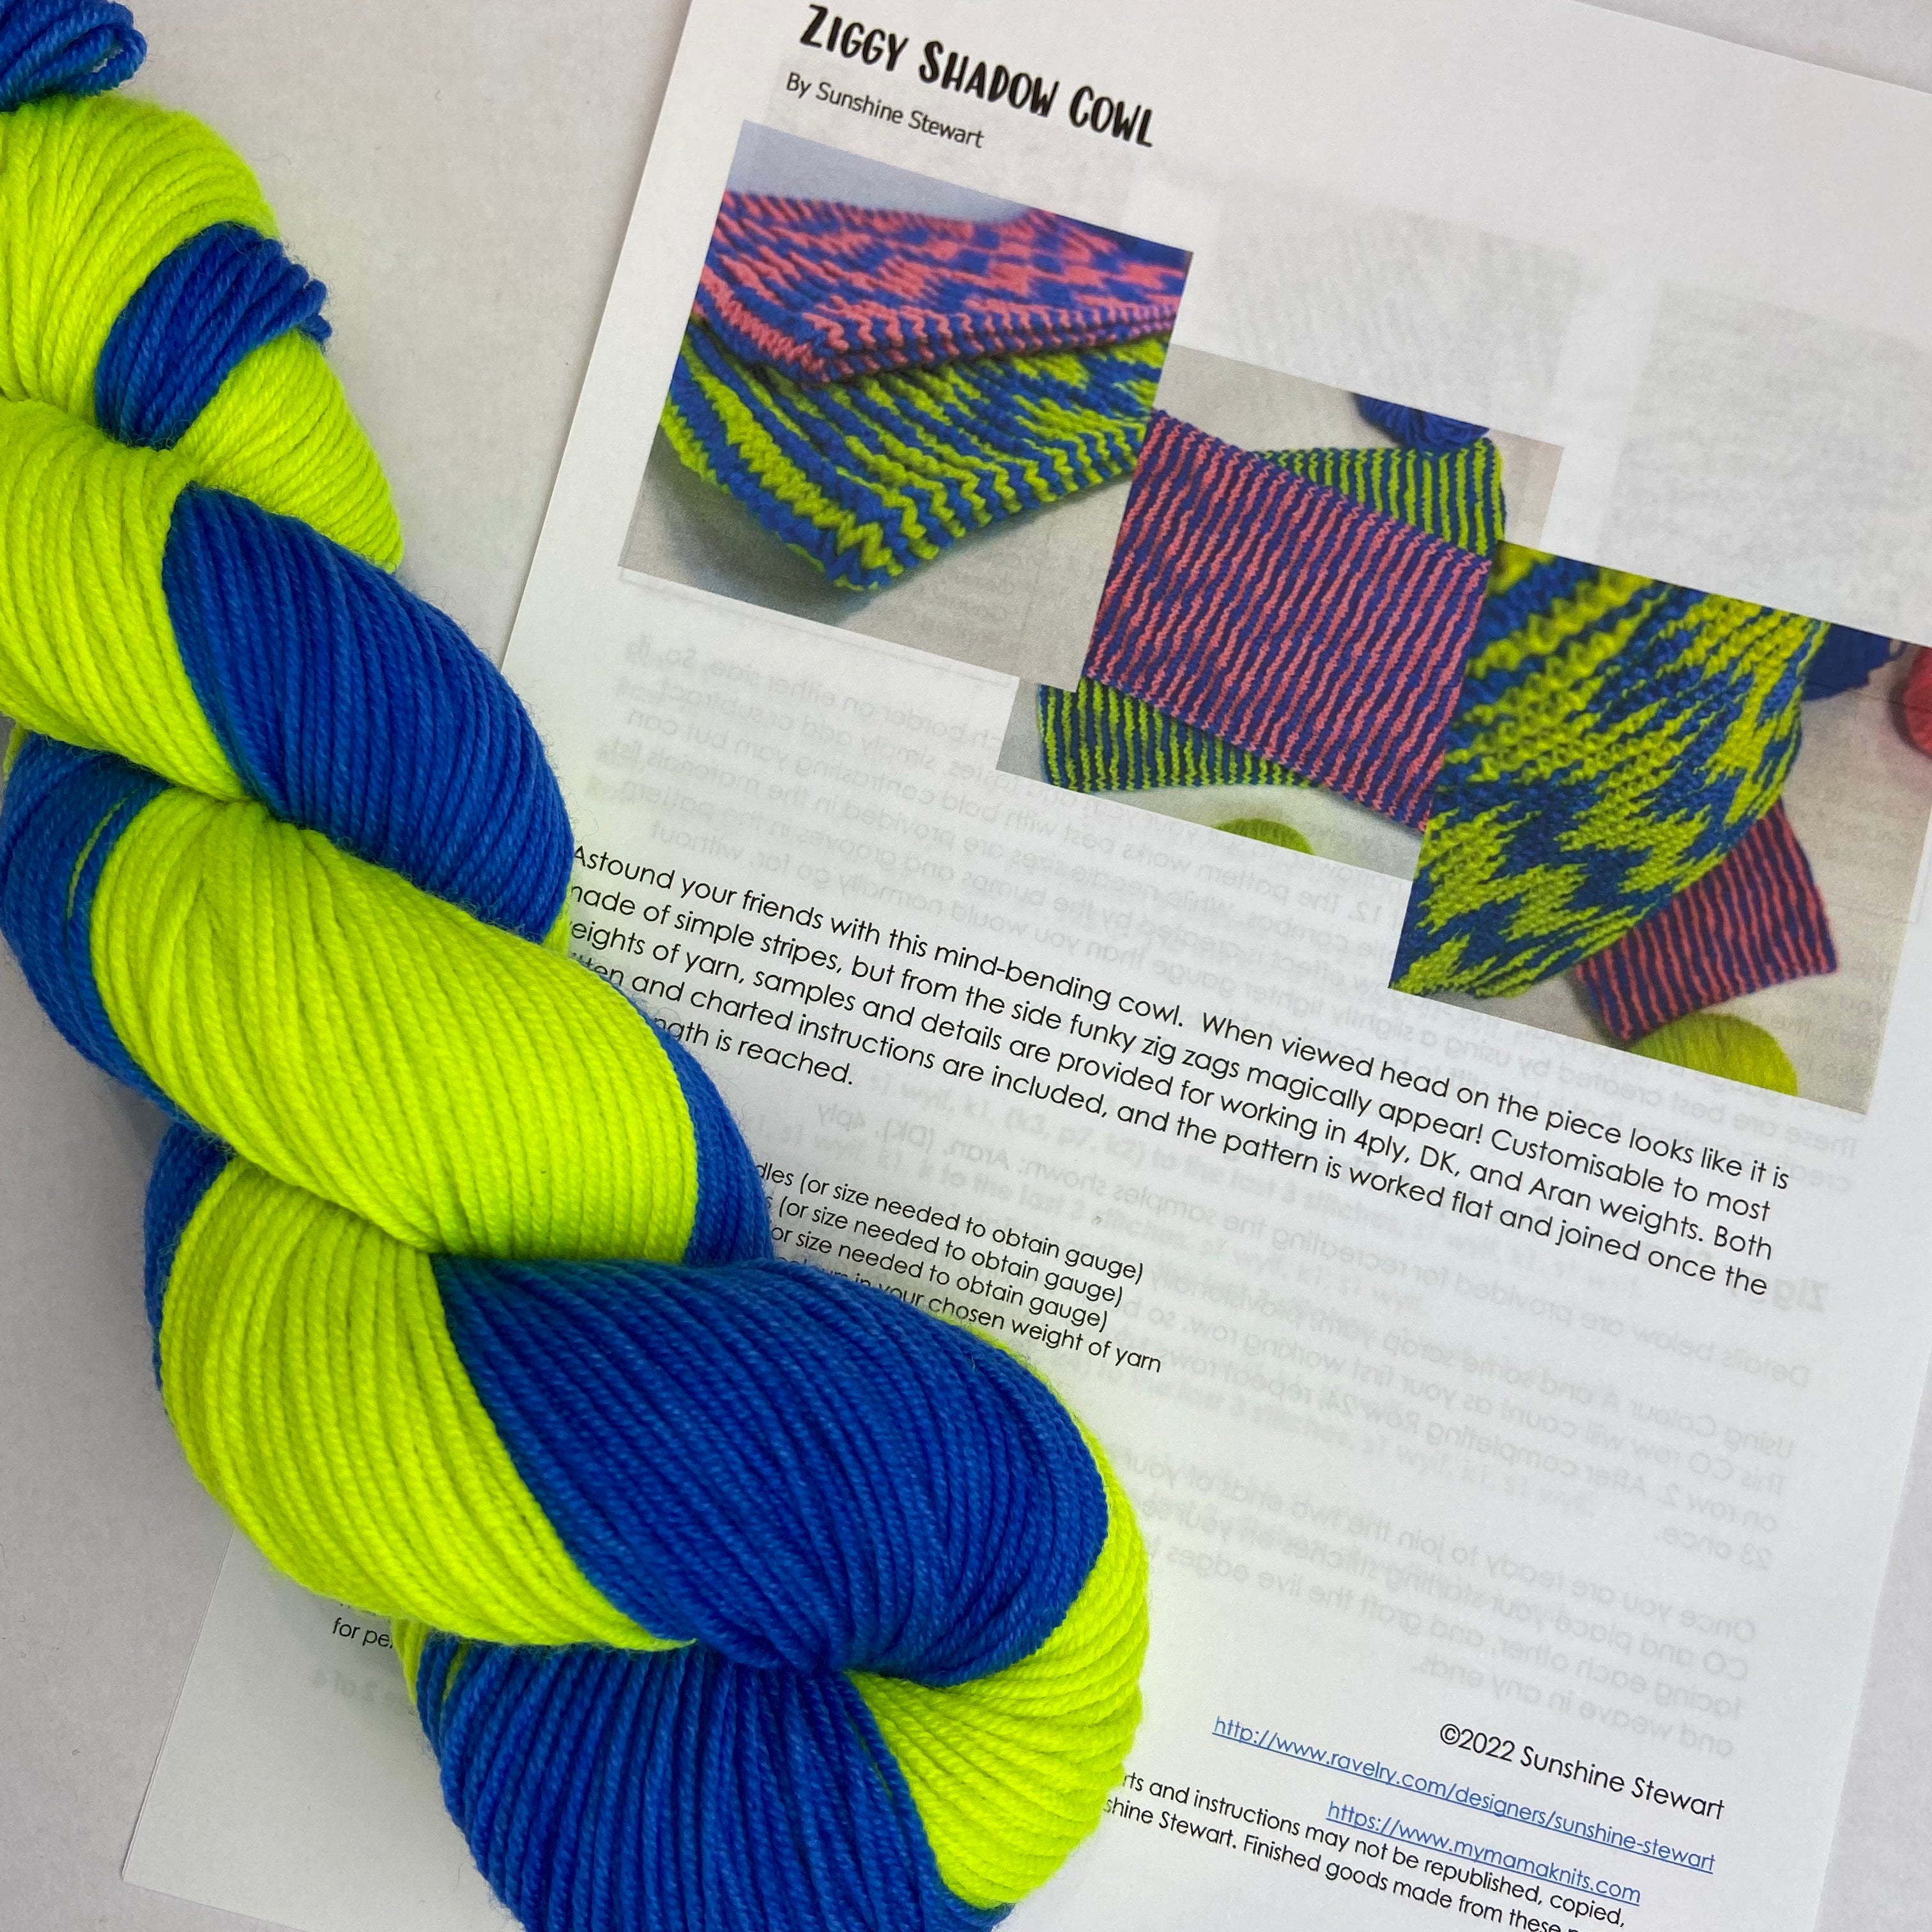 Ziggy Shadow Cowl Kit - Yarn, Knitting Pattern & Optional Project Bag